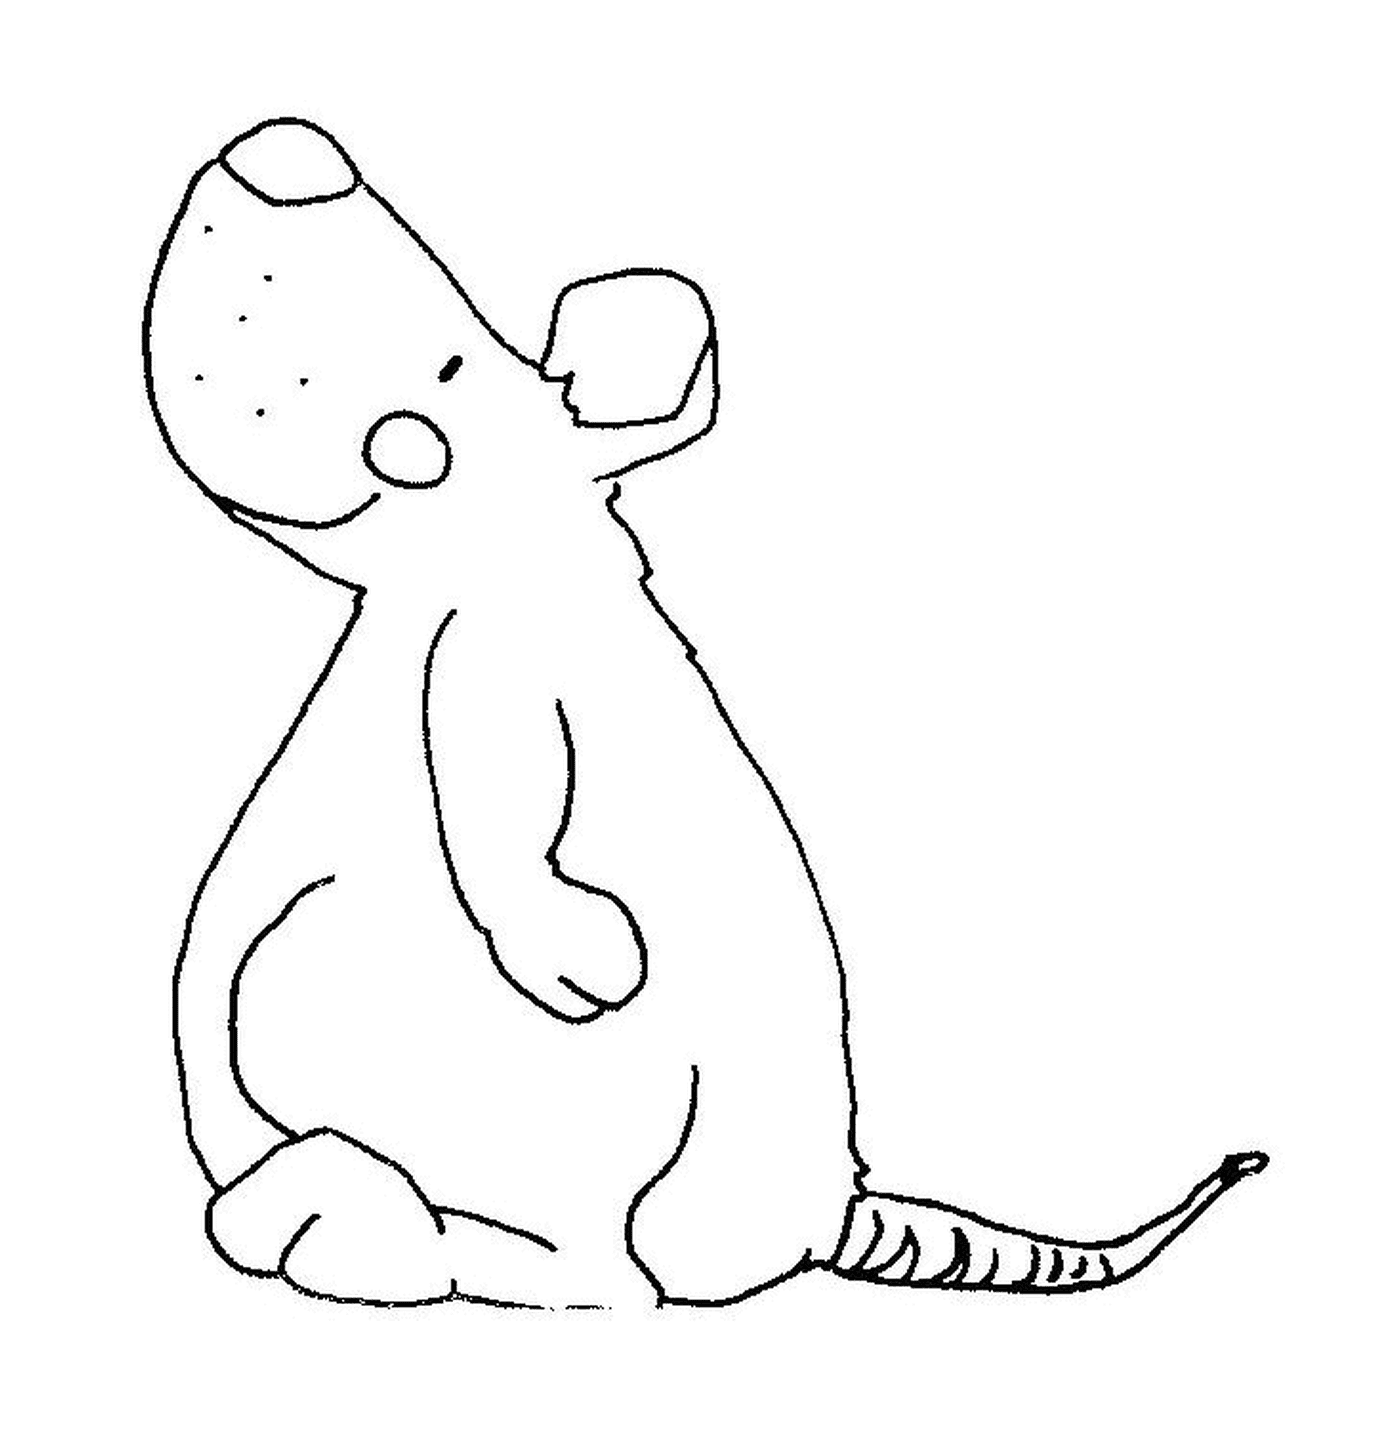  Um rato grande 